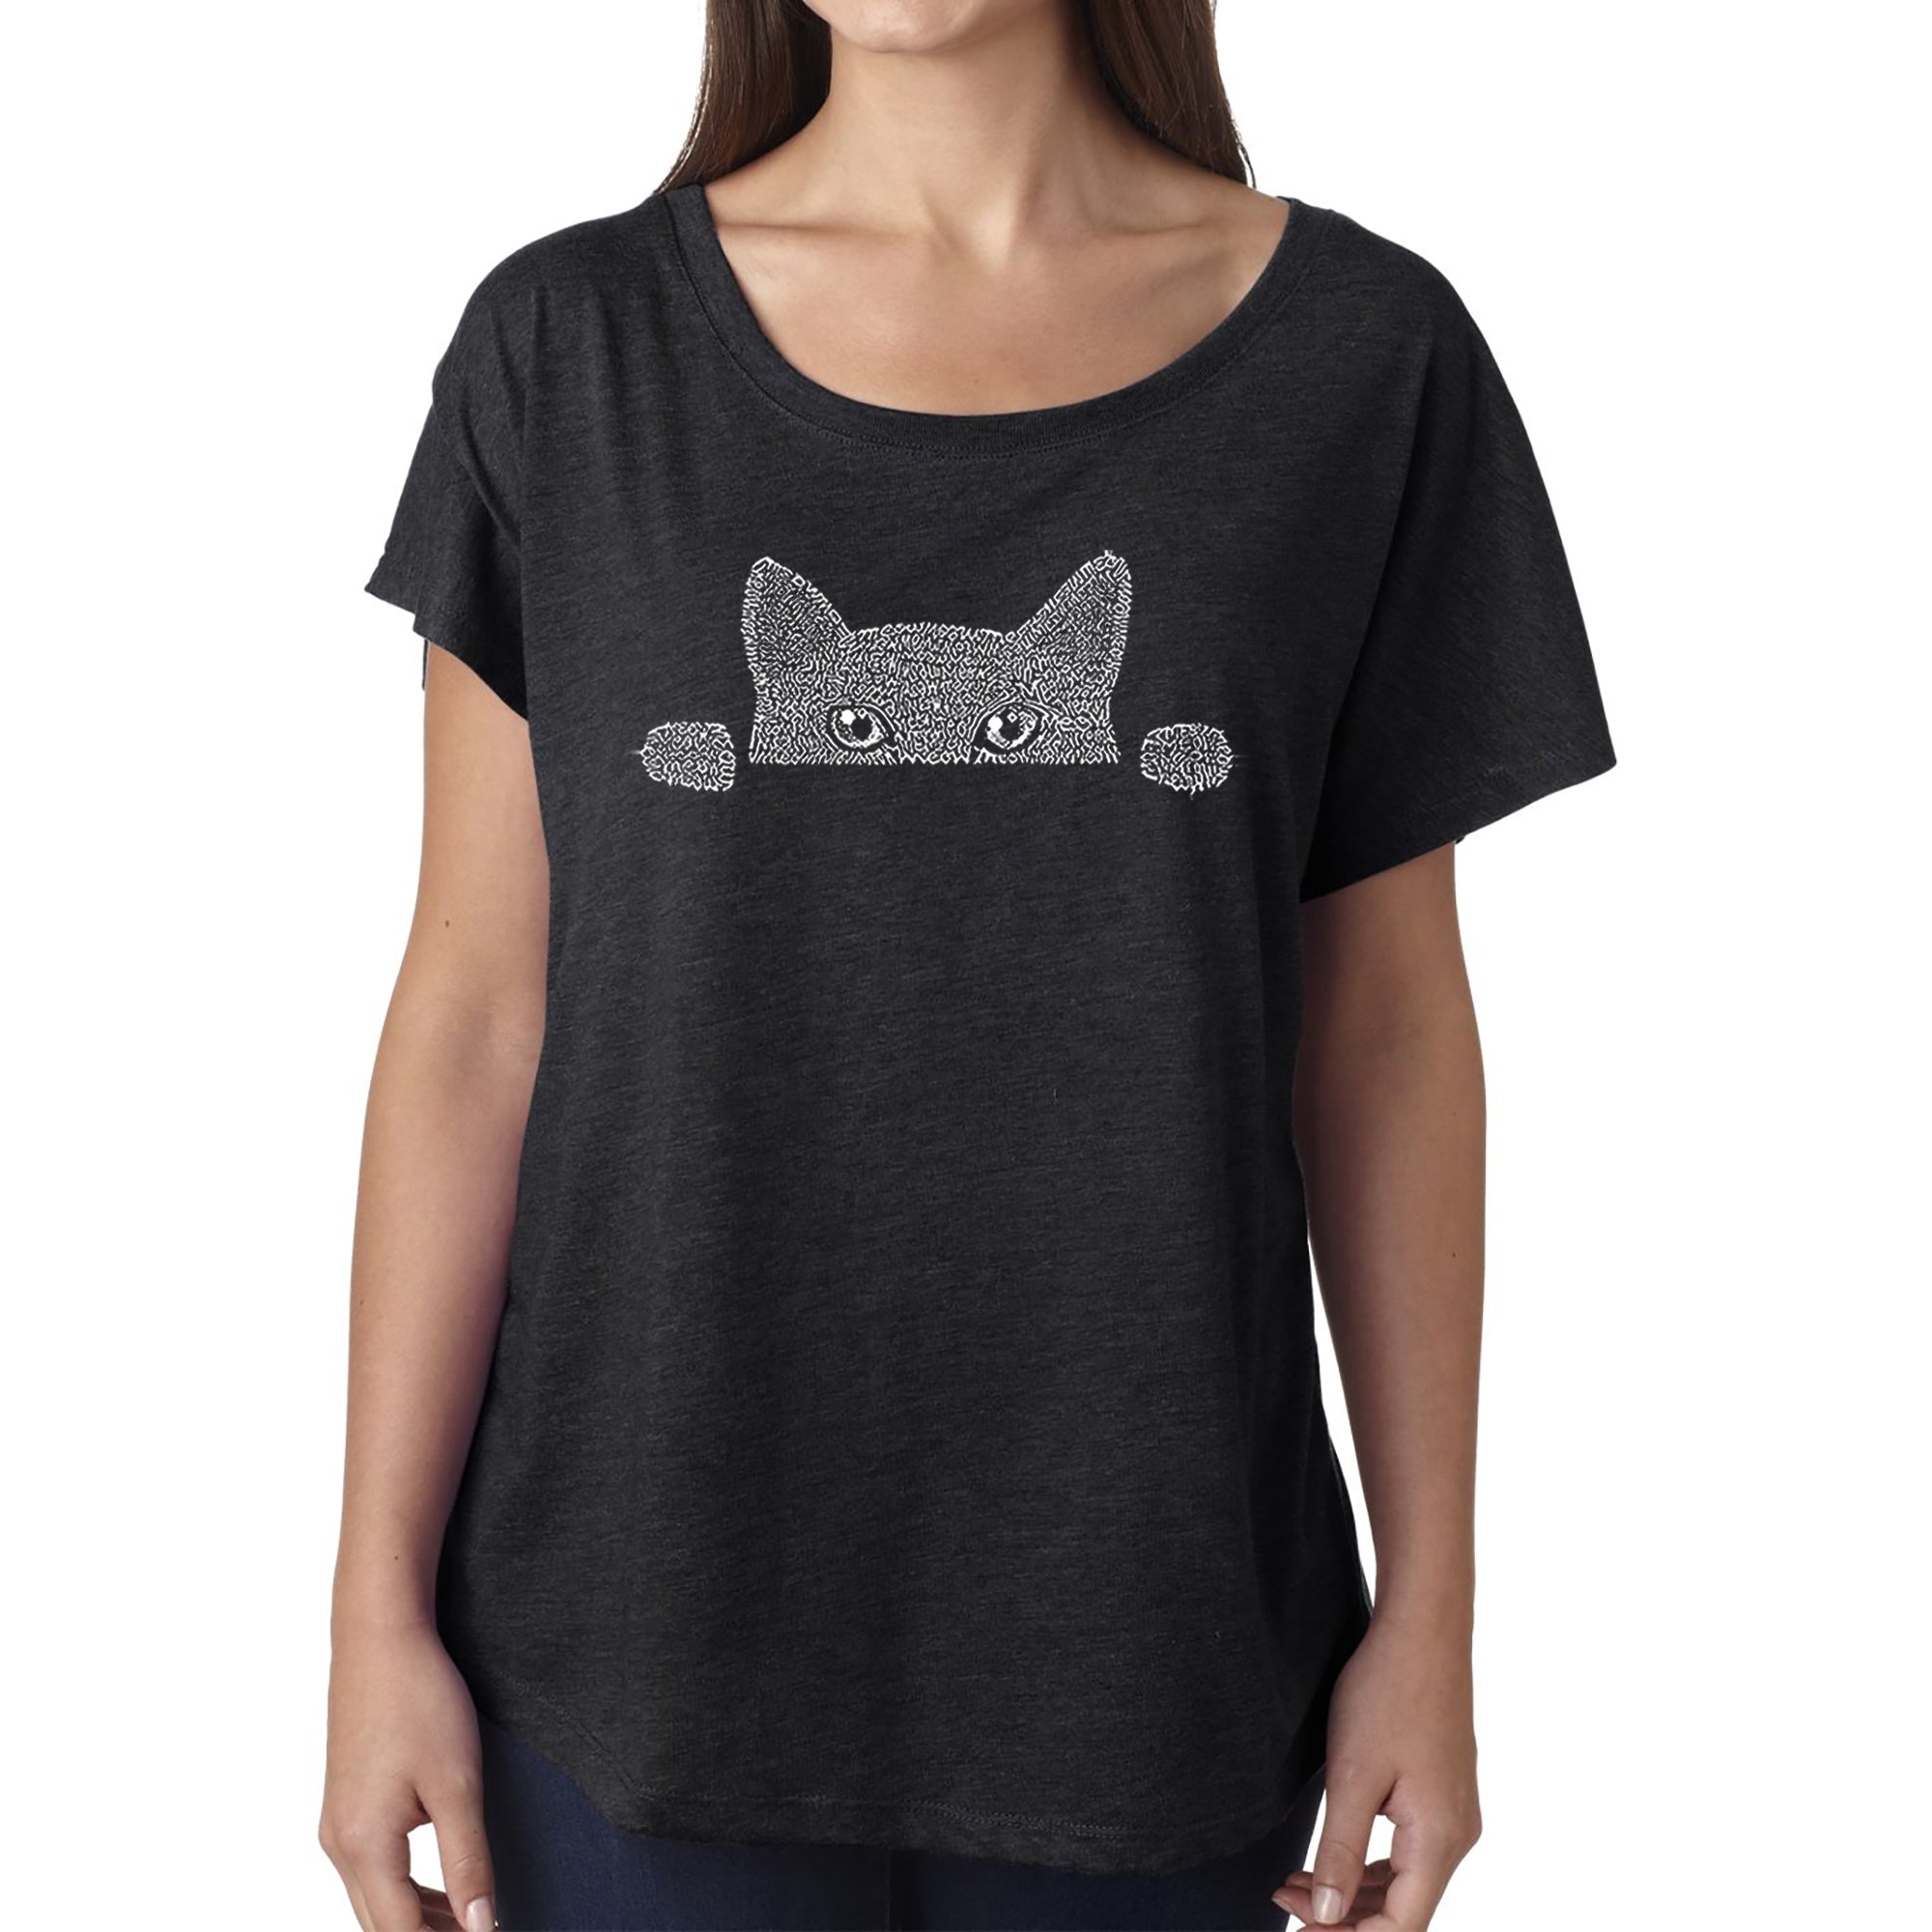 Peeking Cat - Women's Loose Fit Dolman Cut Word Art Shirt - Black - Small